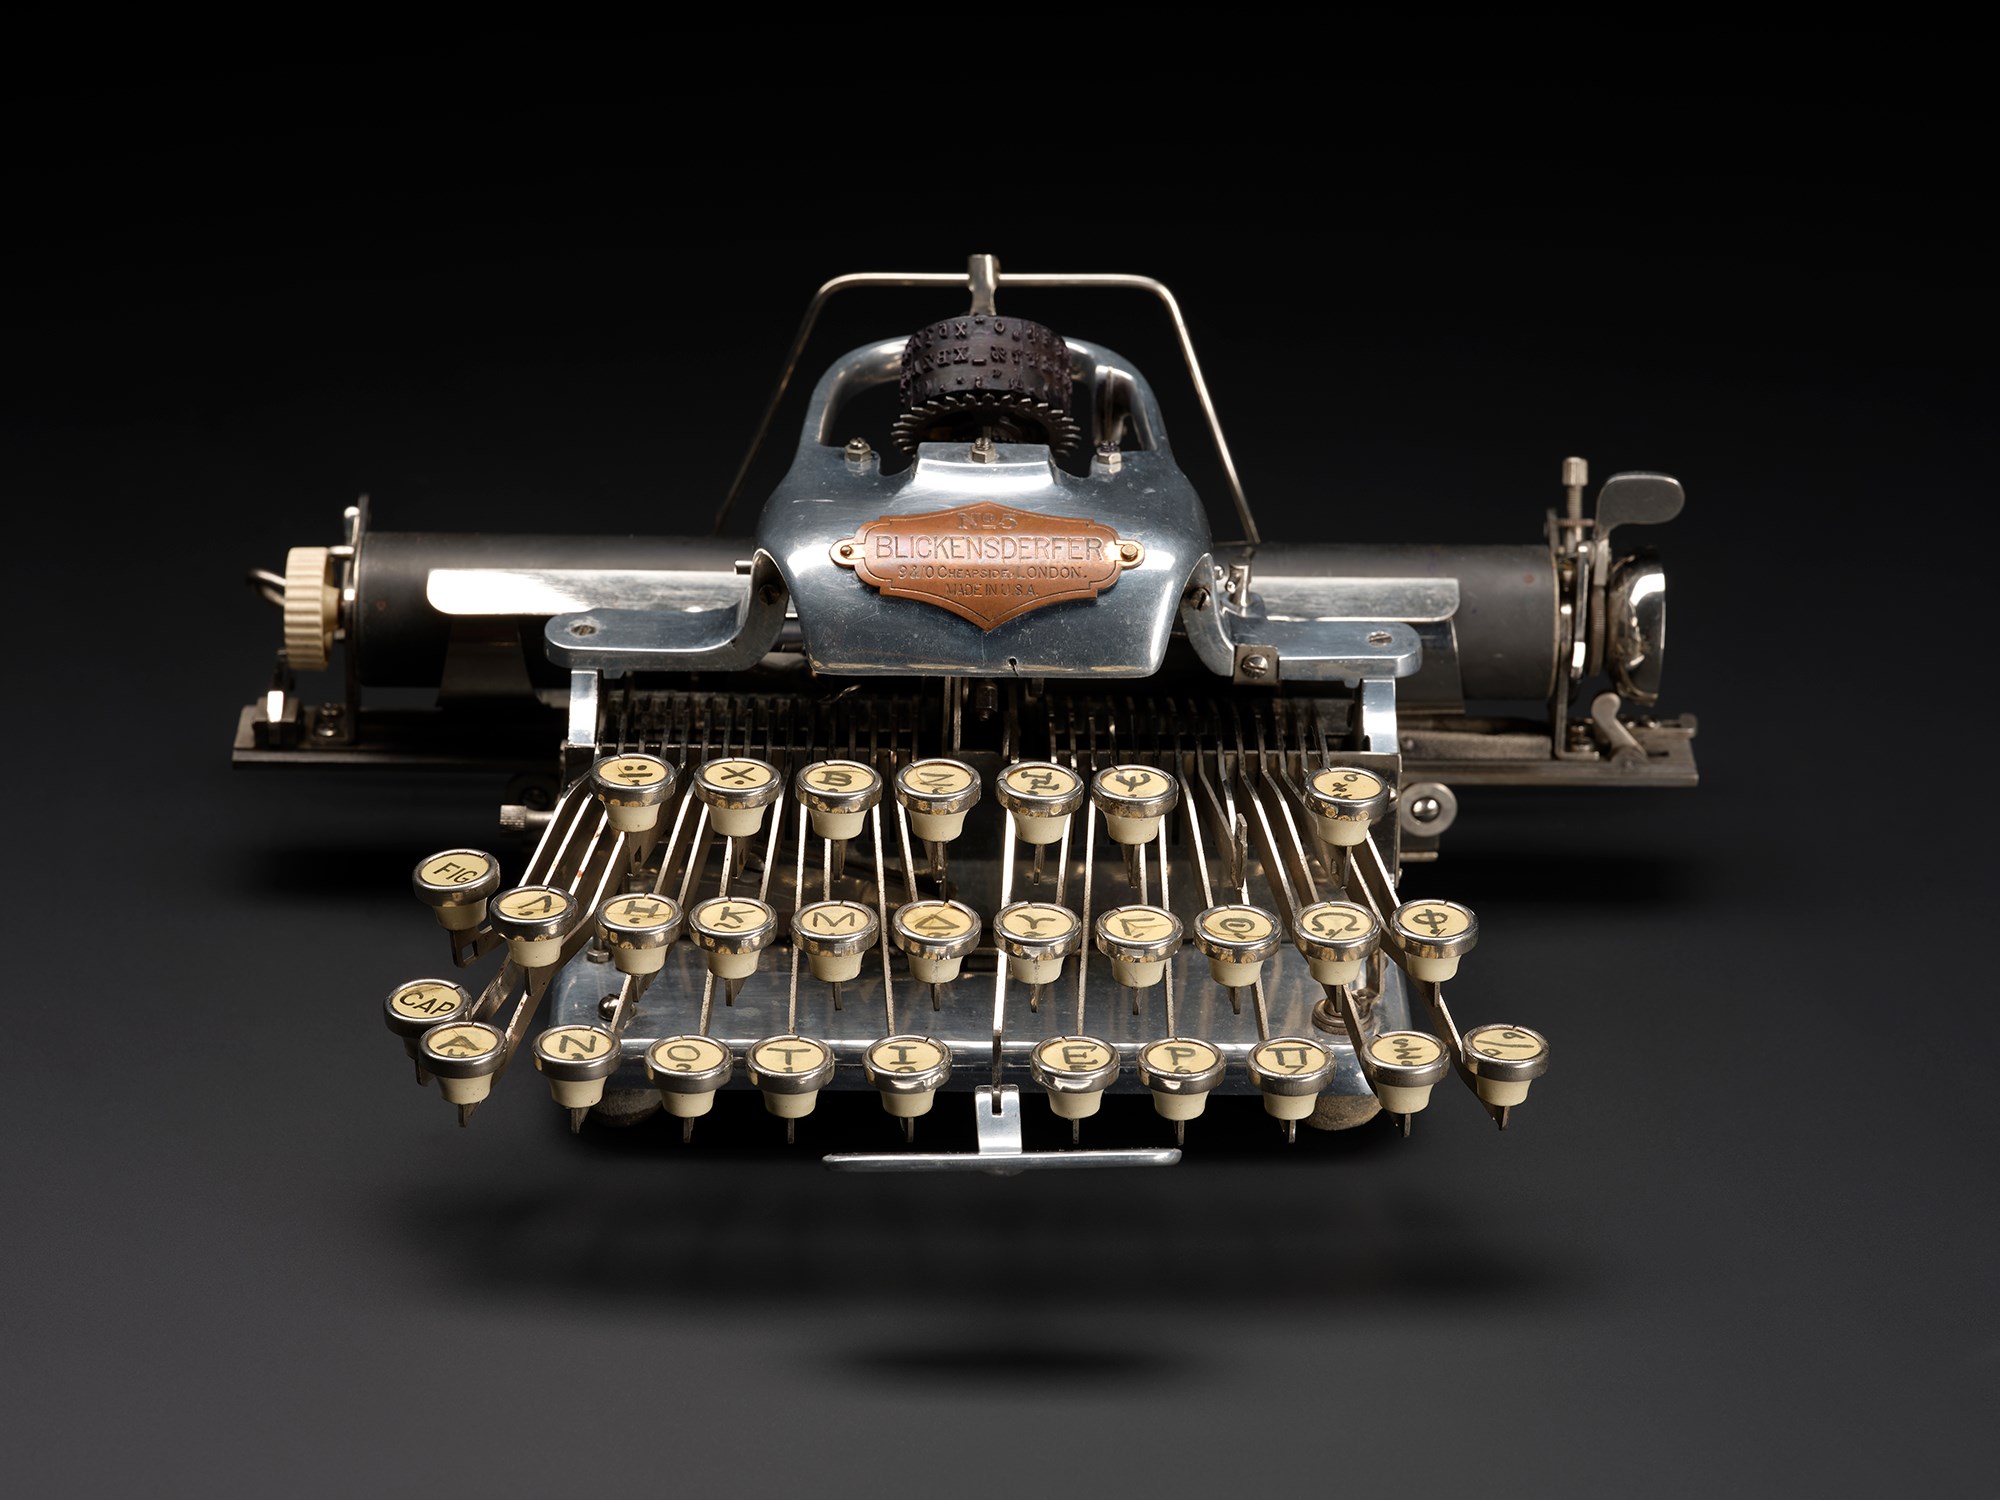 A sleek black typewriter with cream-coloured keys against a dark grey background.